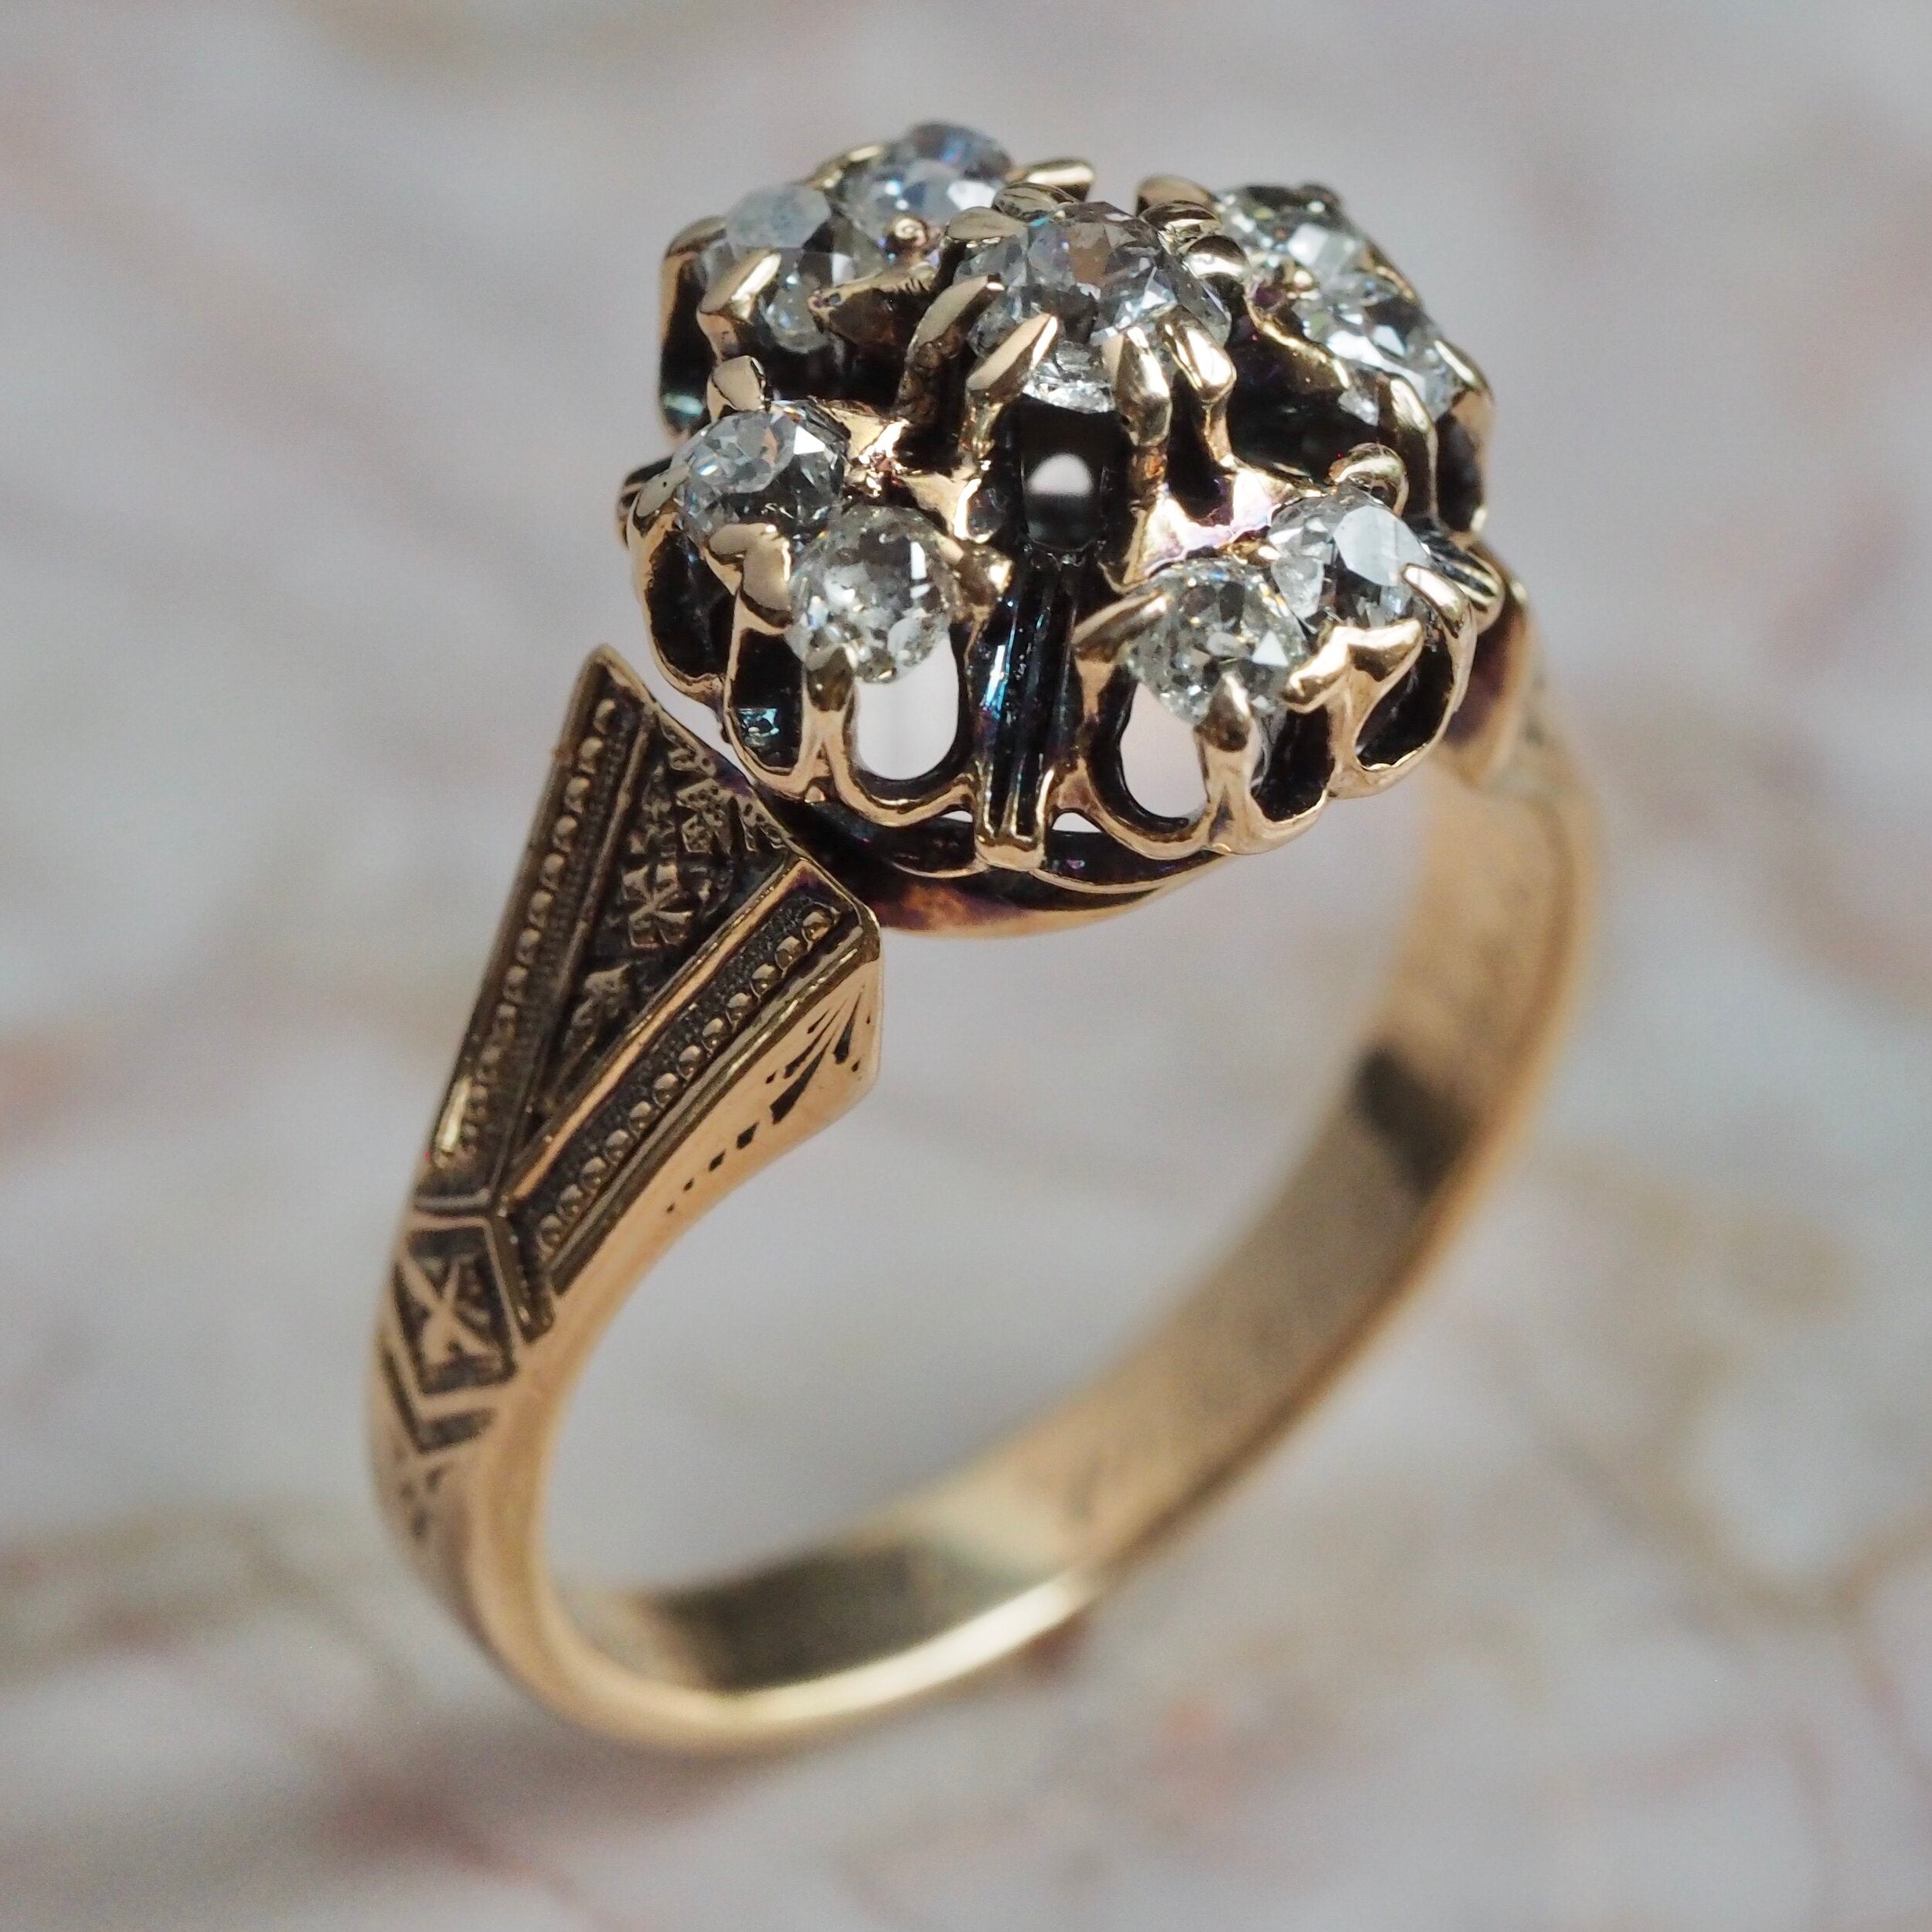 Antique Victorian c. 1872 14k Gold Old Mine Cut Diamond Engagement Ring